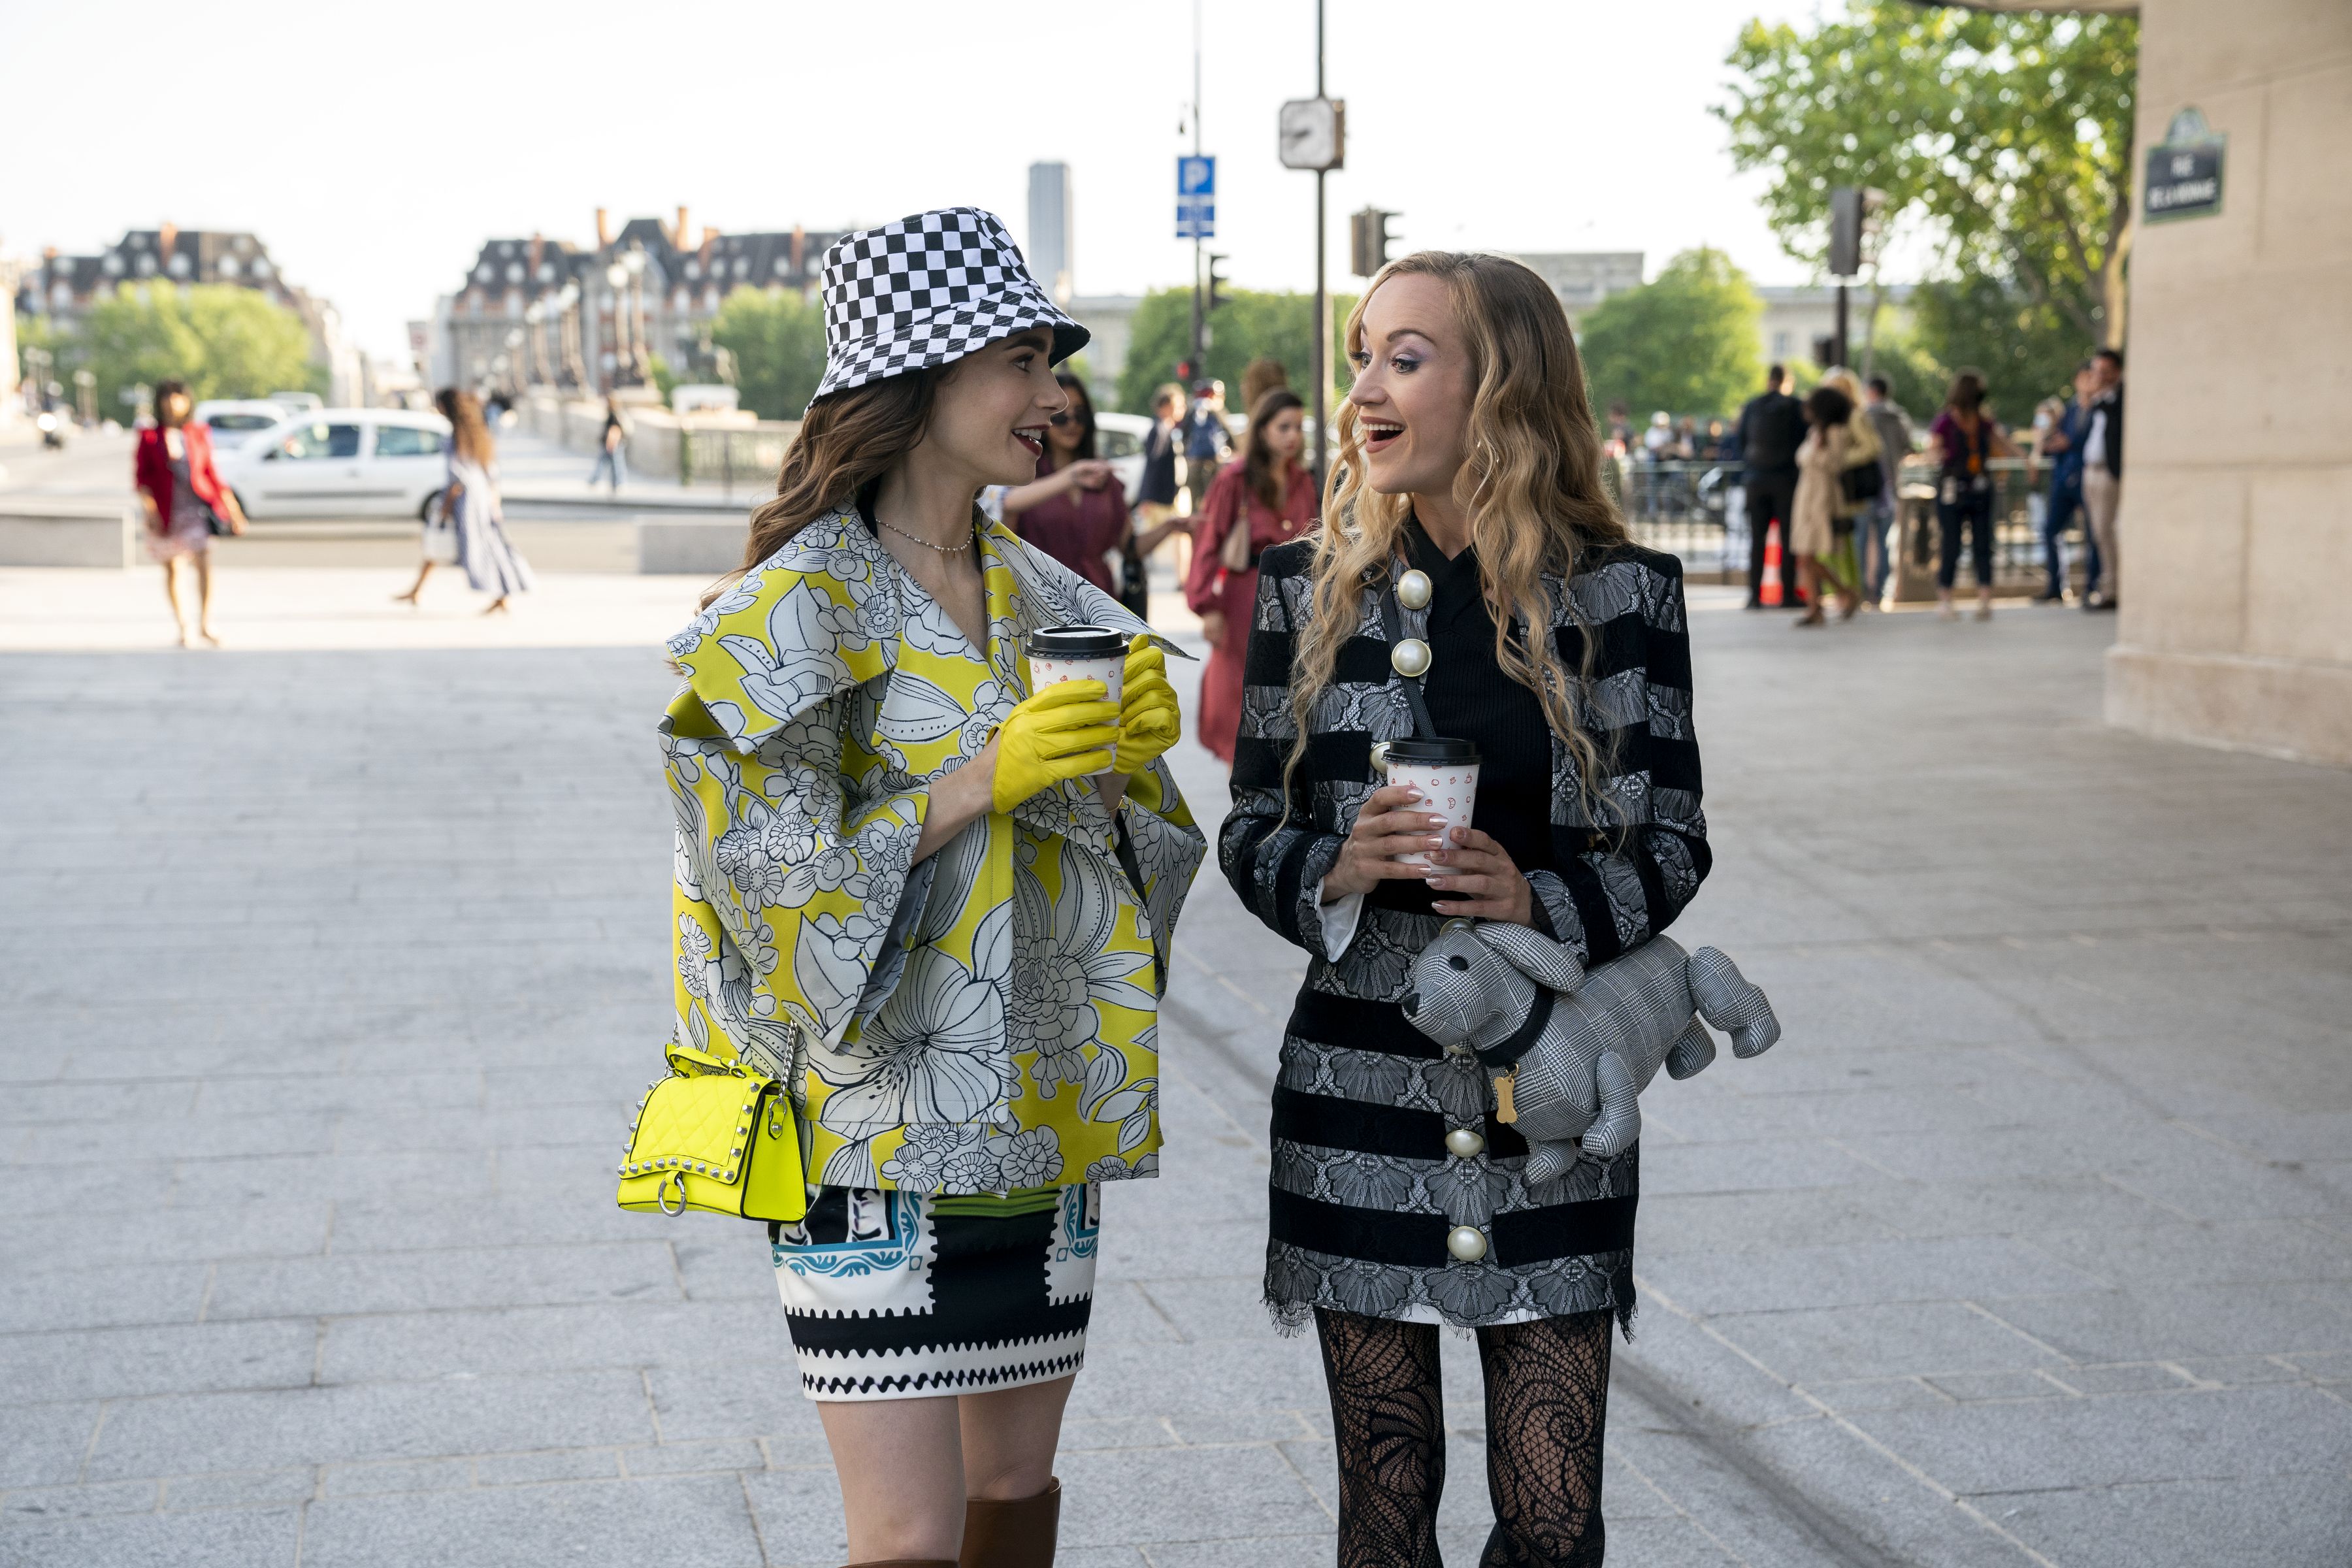 Emily in Paris fuels spike in Chanel interest